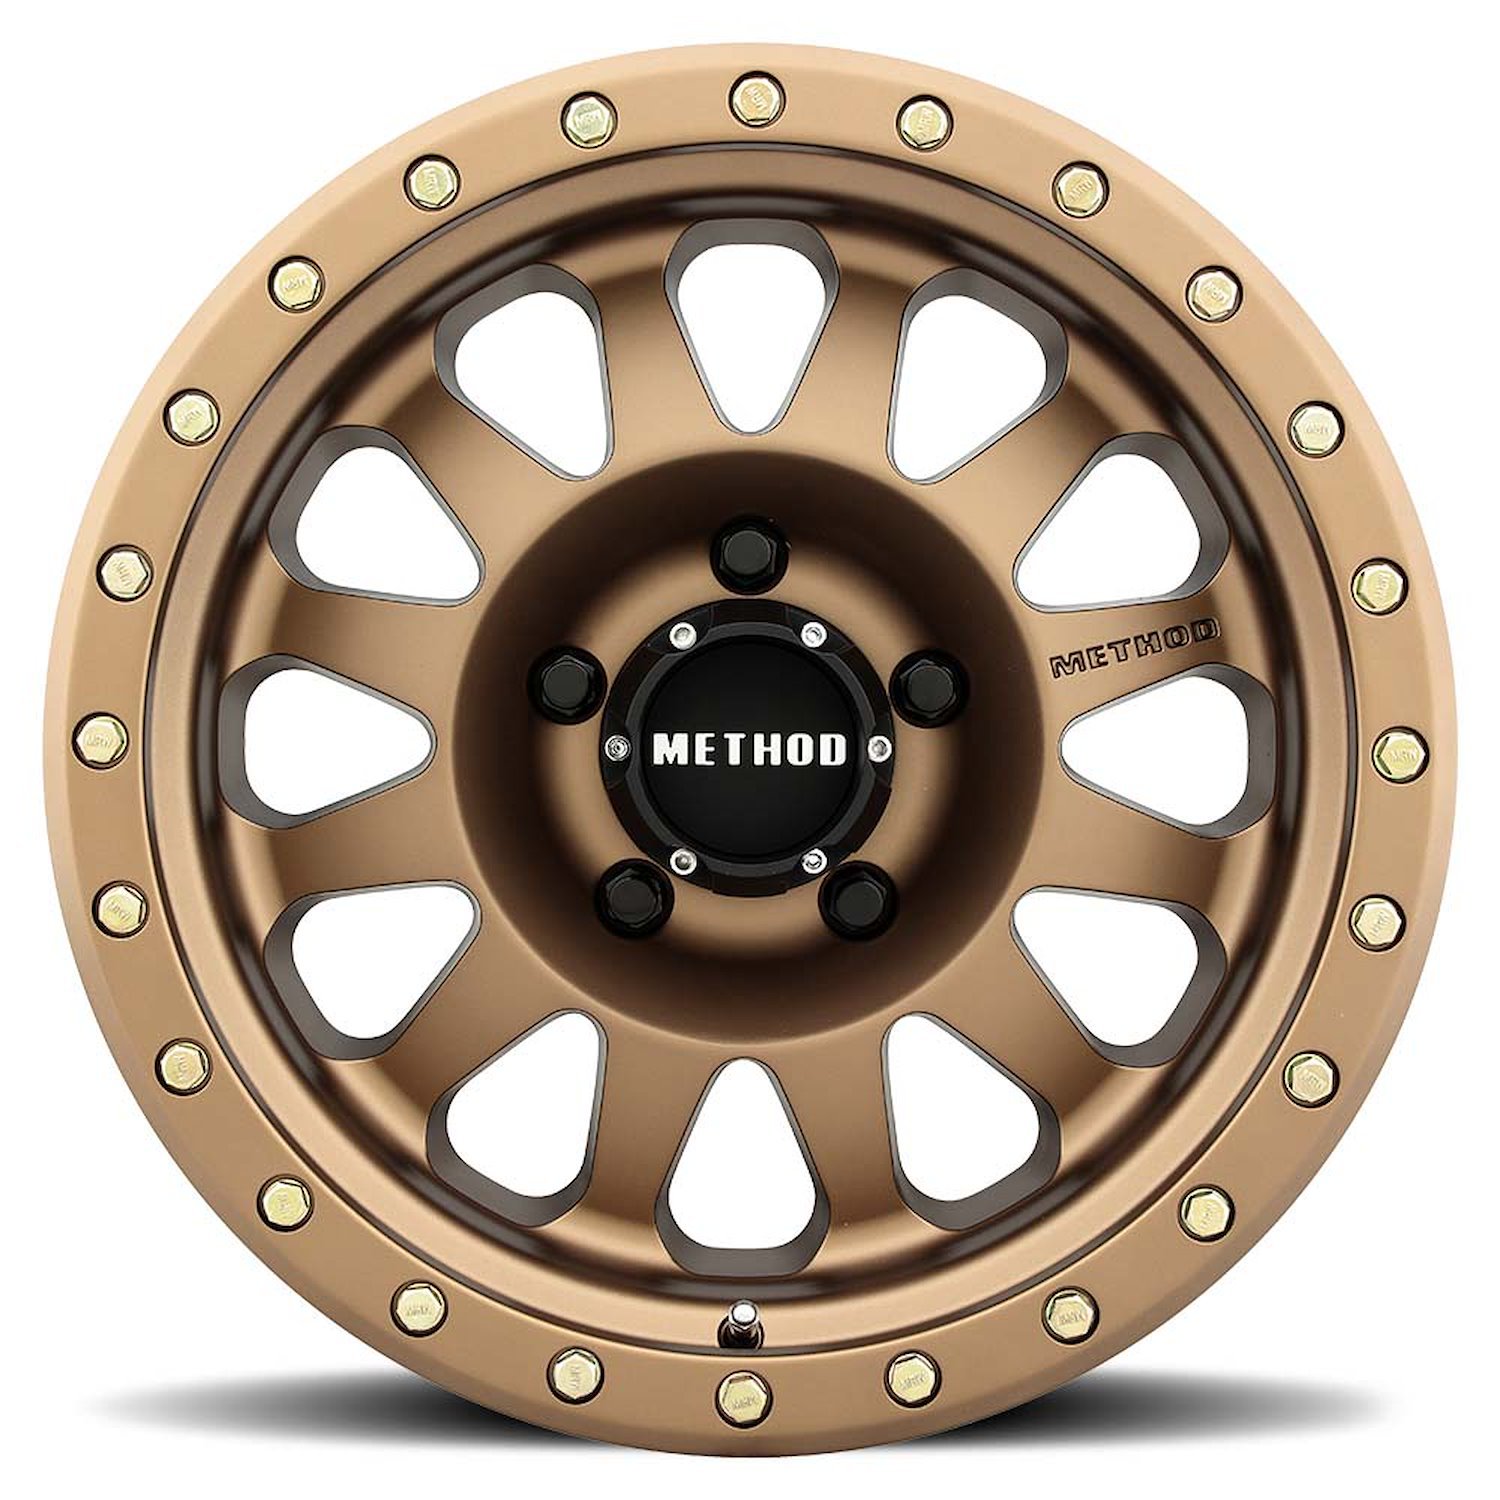 MR30478555900 STREET MR304 Double Standard Wheel [Size: 17" x 8.5"] Method Bronze